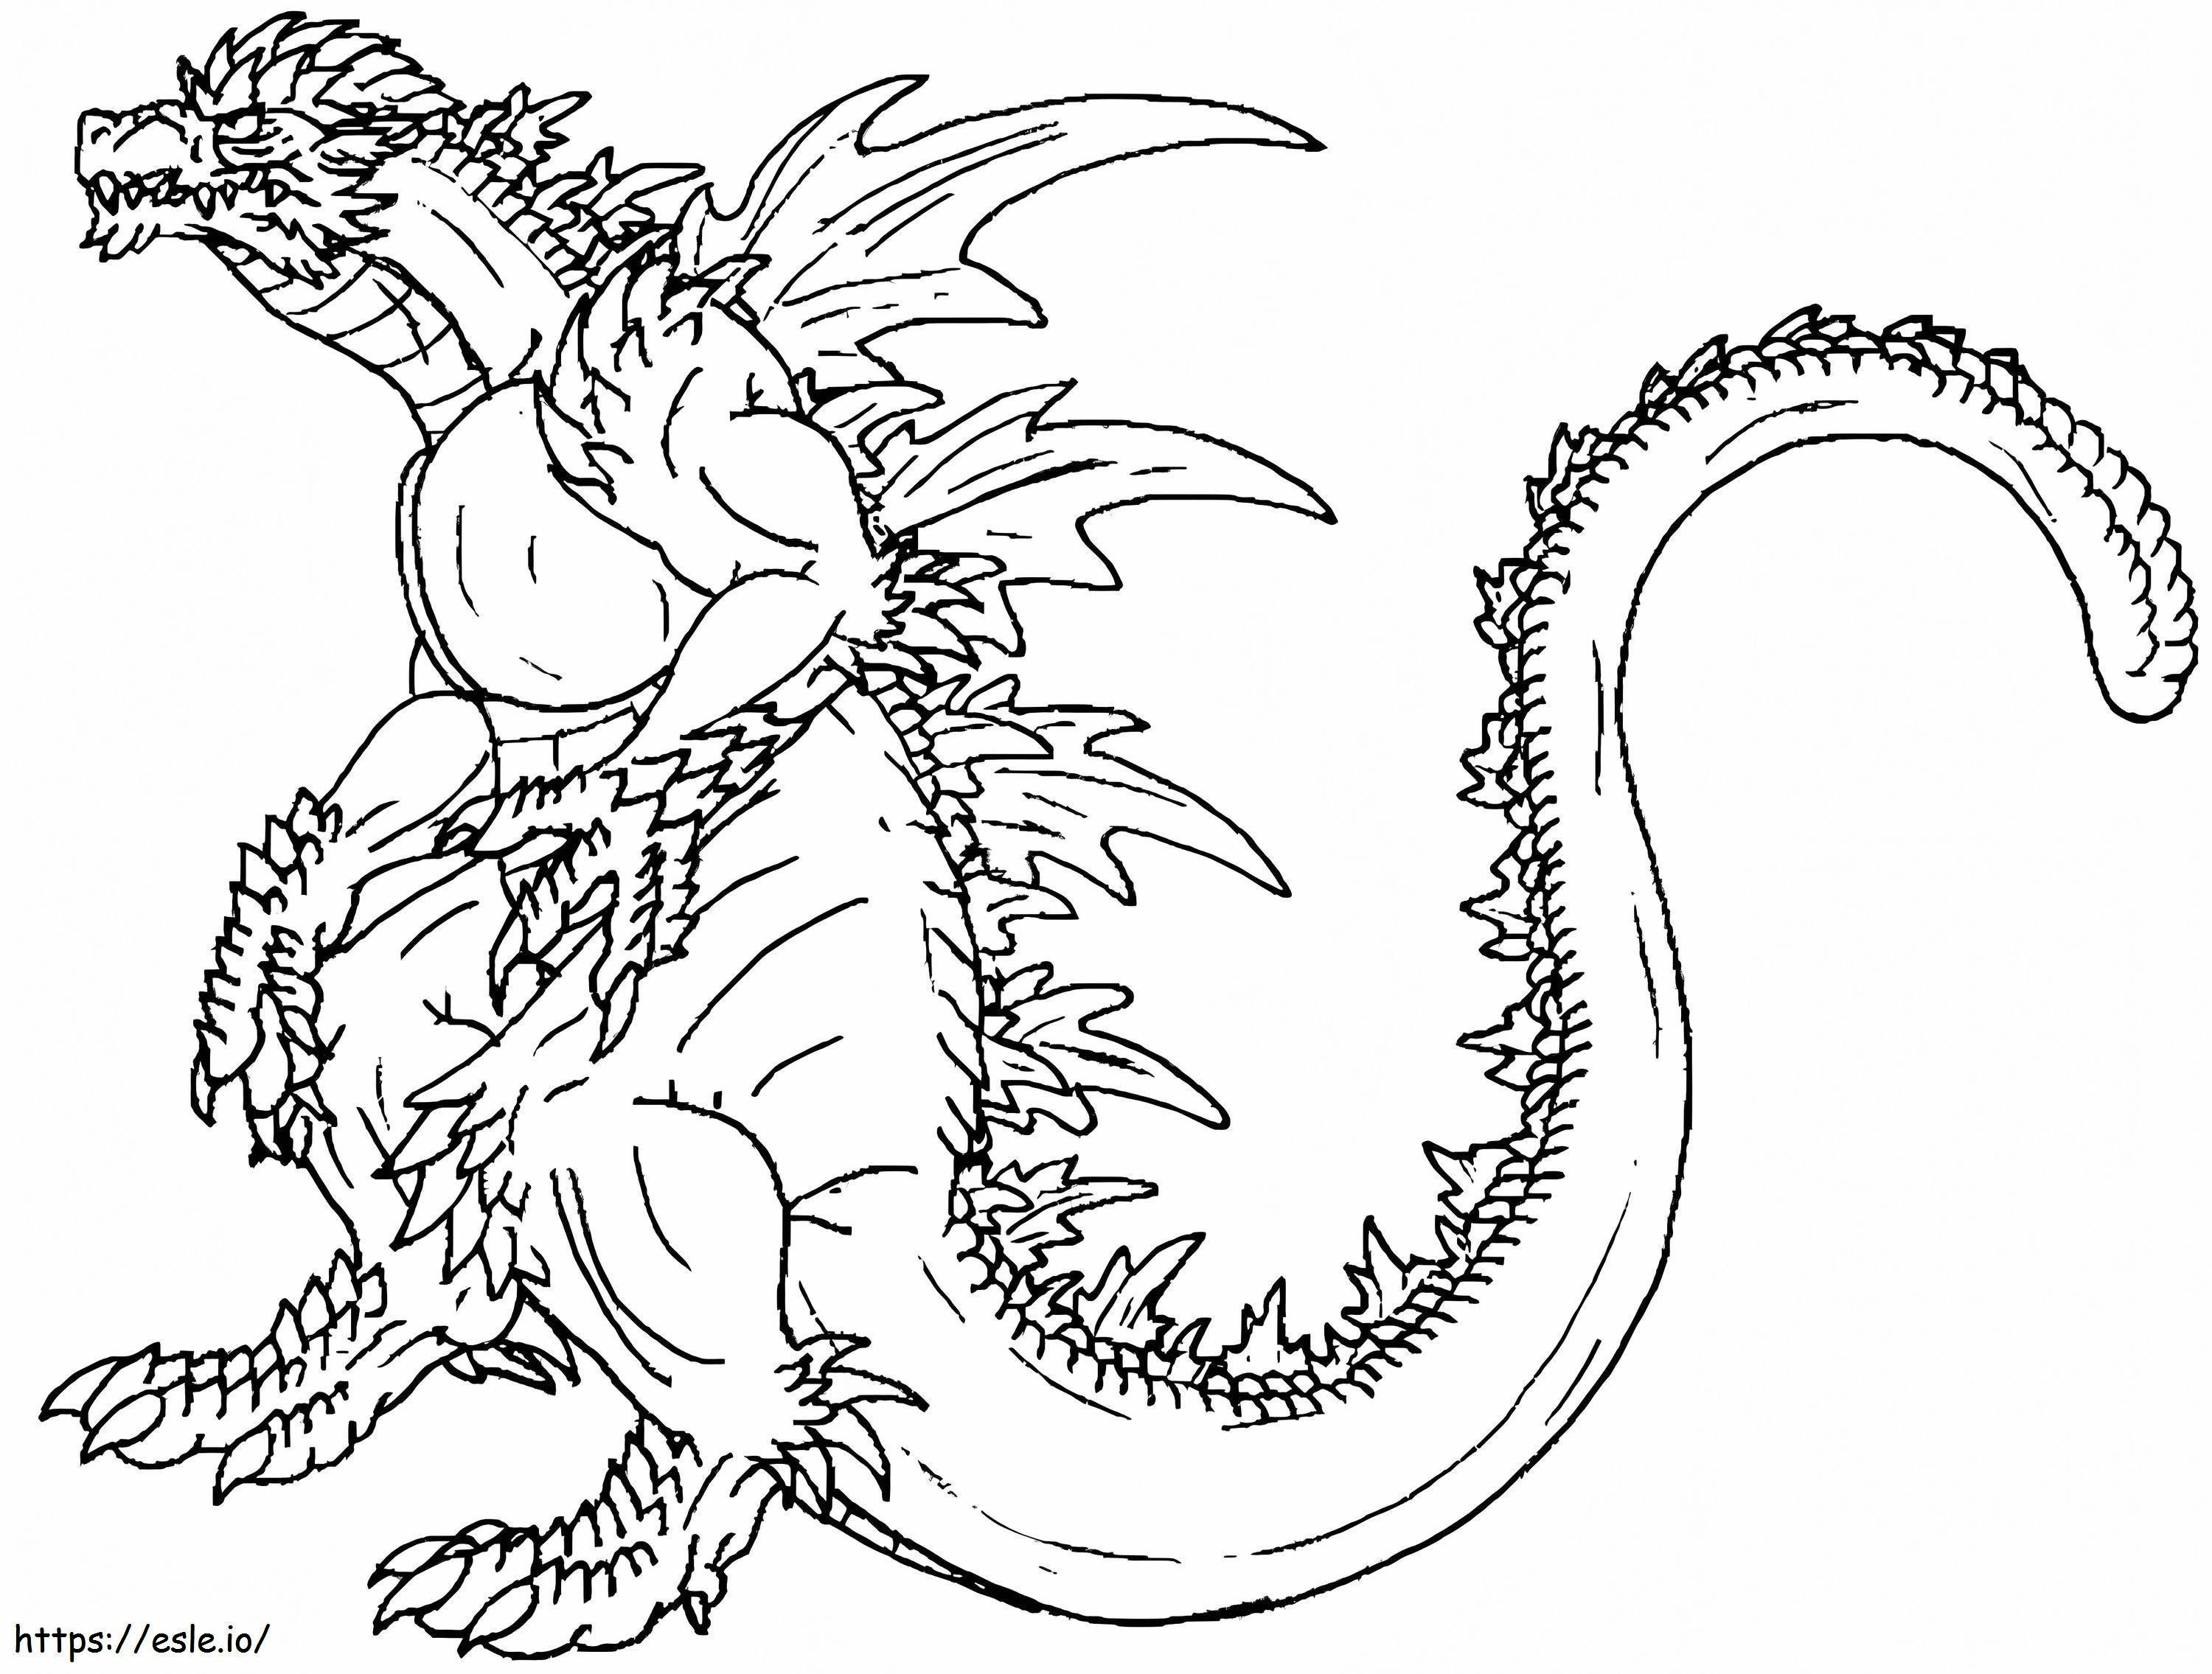 Great Godzilla coloring page